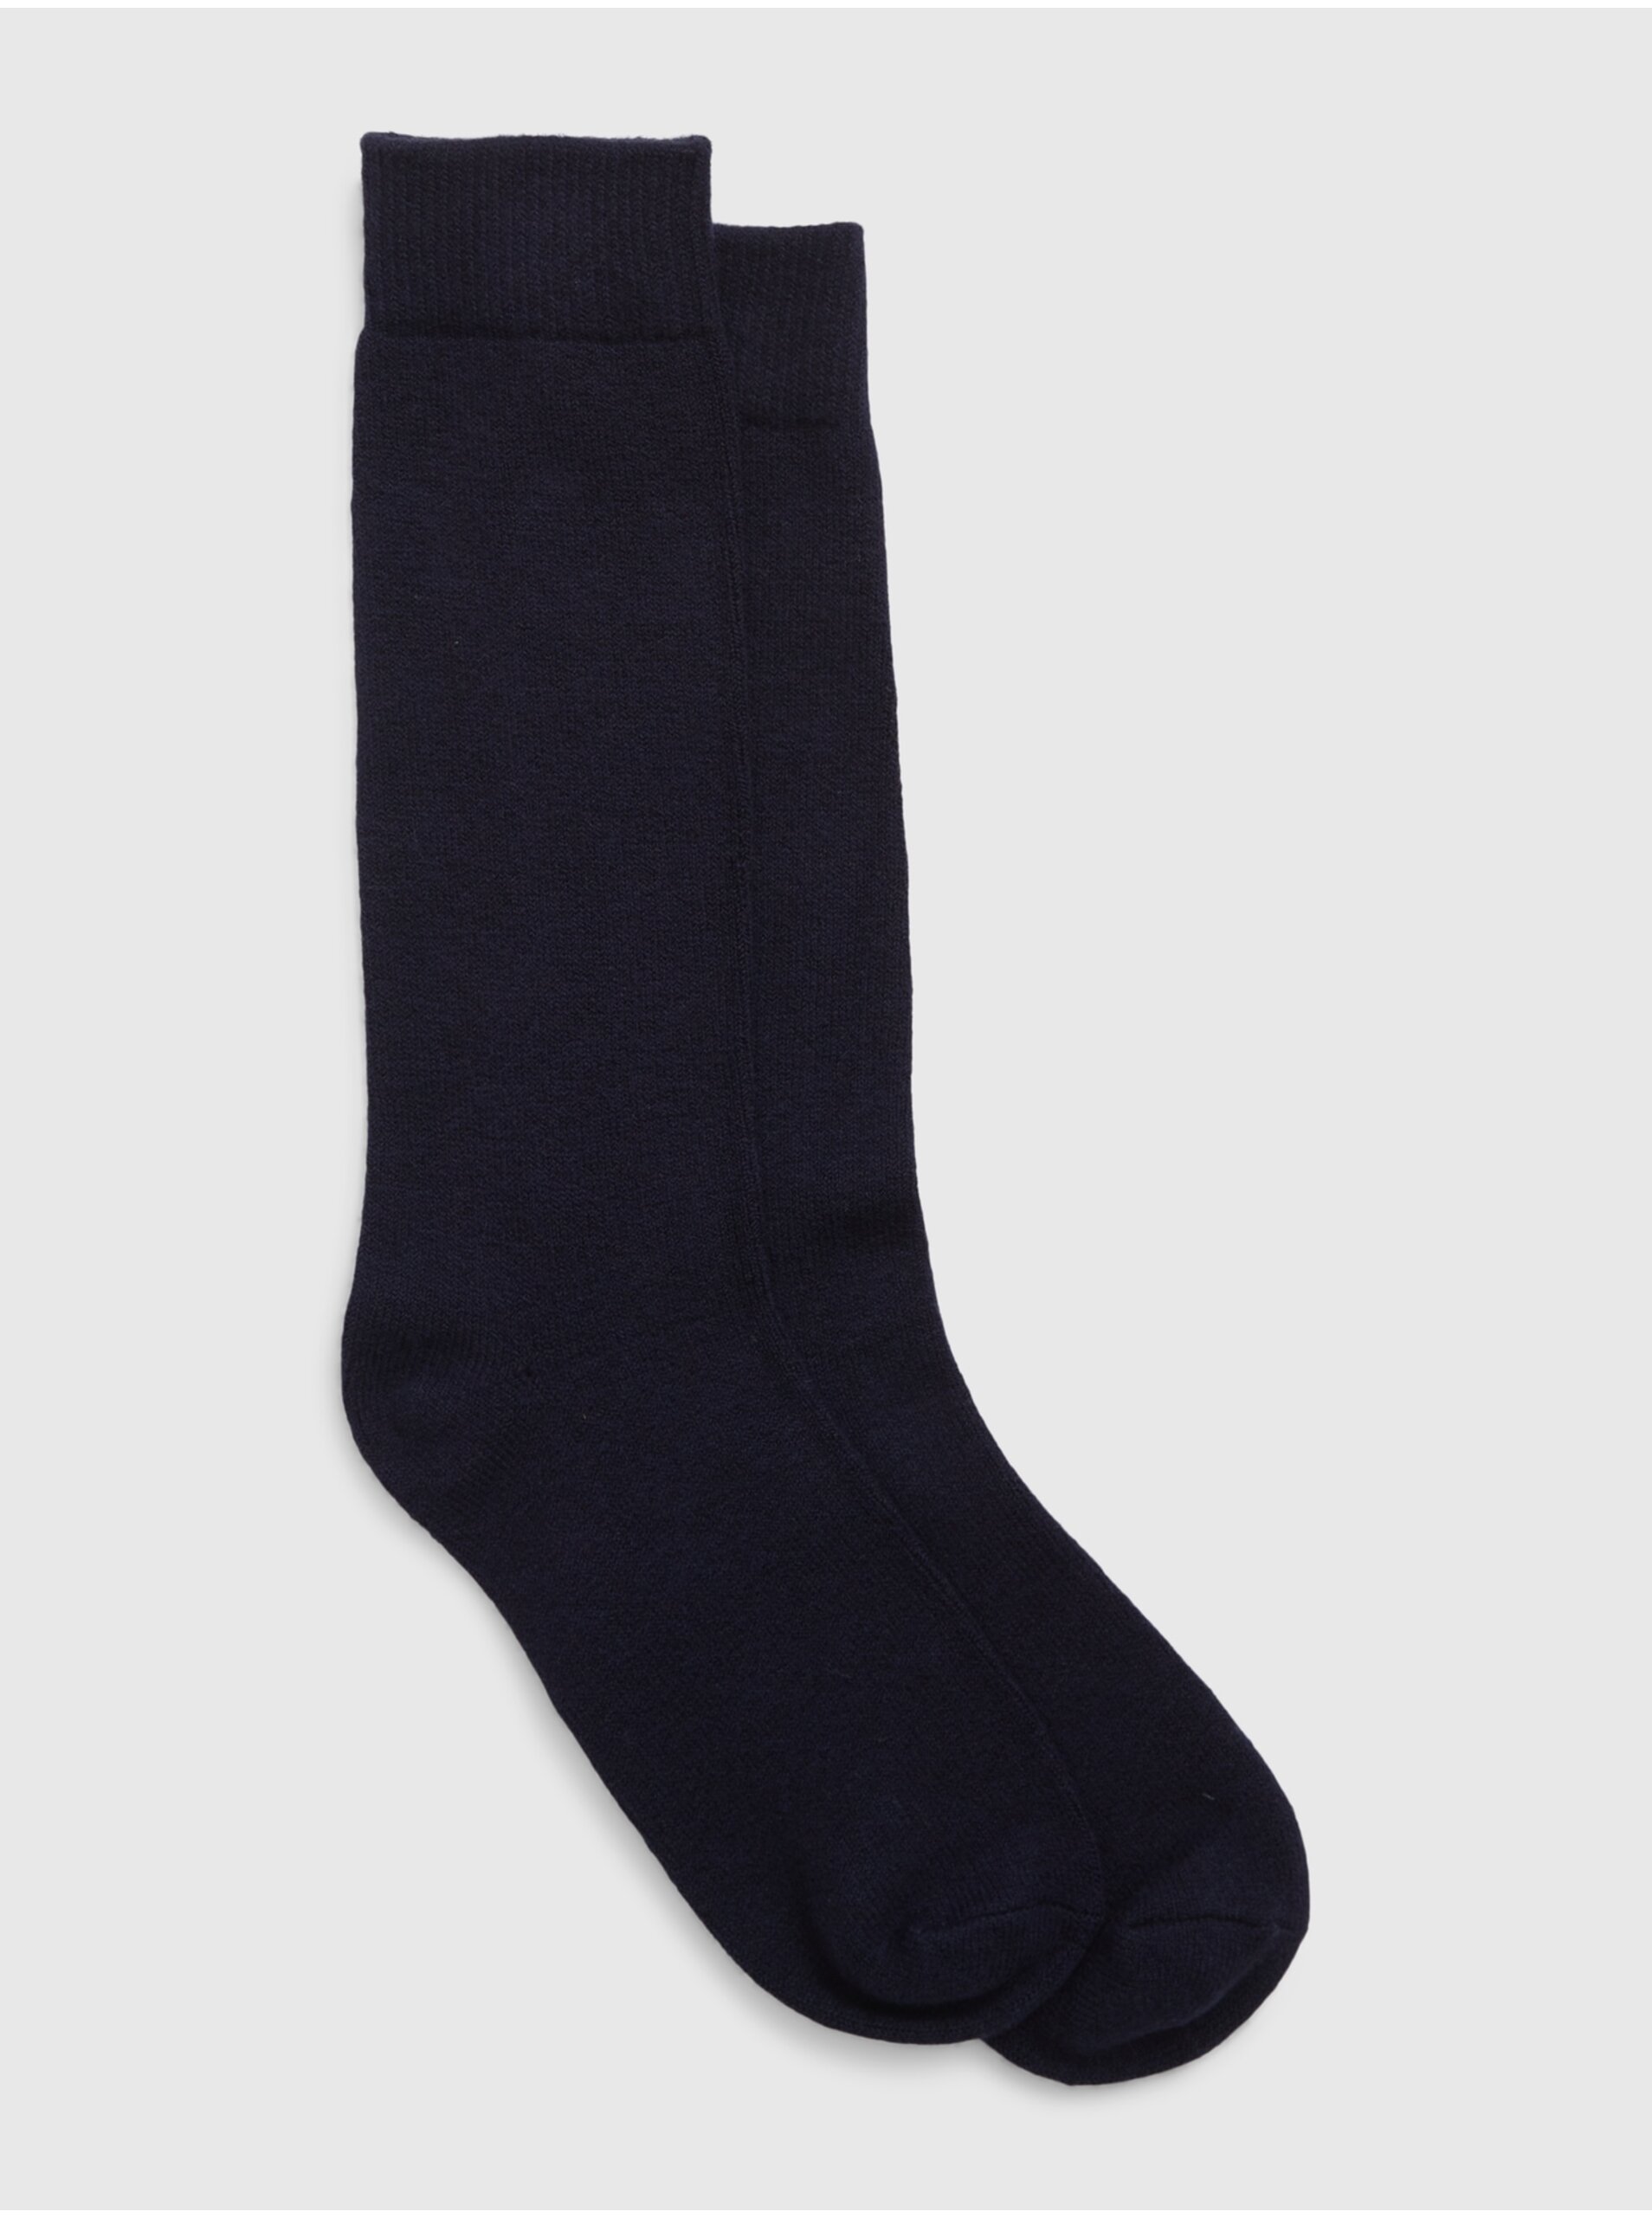 Lacno Tmavomodré unisex ponožky GAP